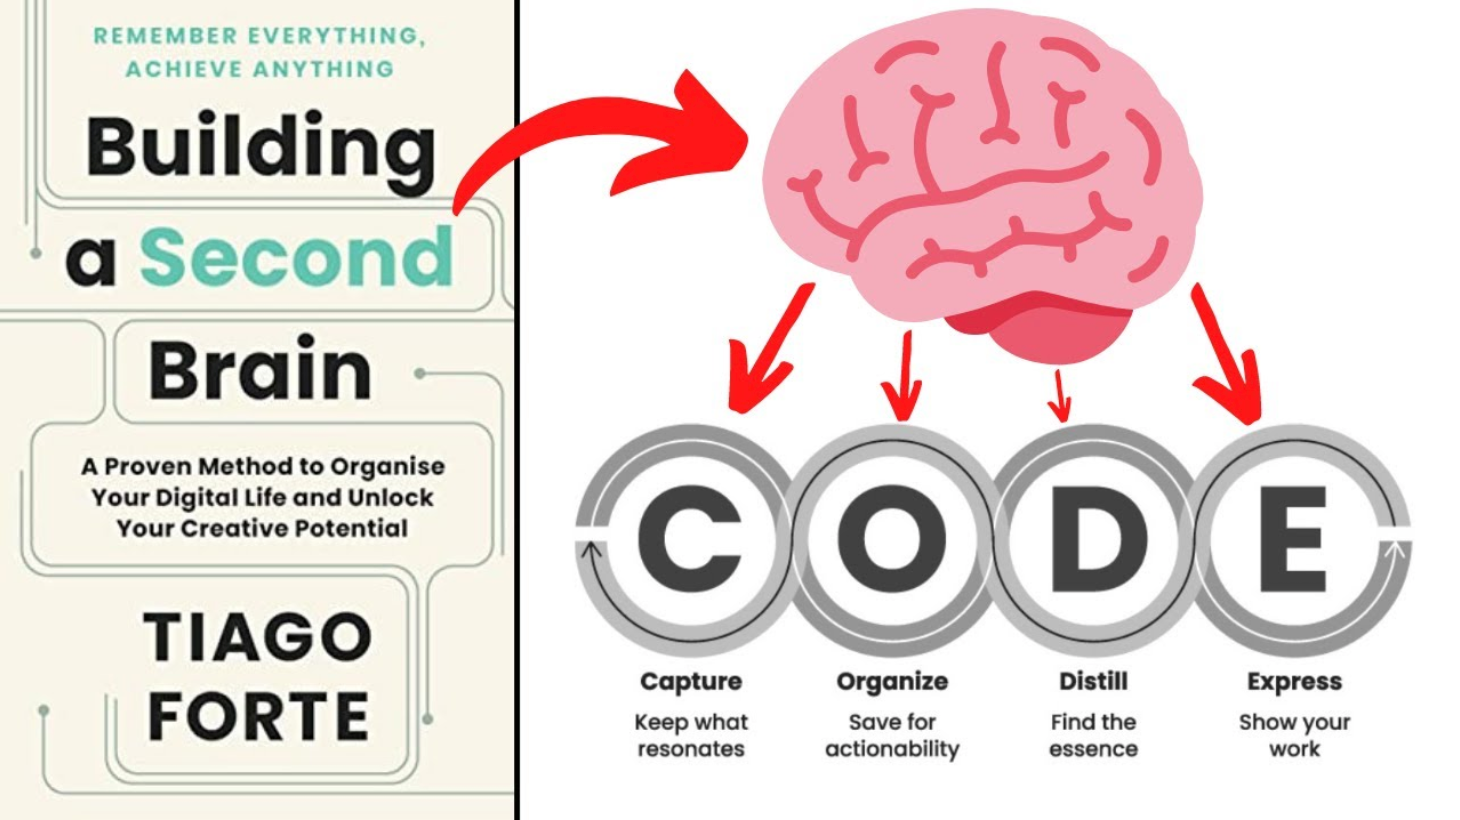 Brain coding. Second Brain. Build a second Brain. Second Brain концепция. Тиаго форте second Brain.